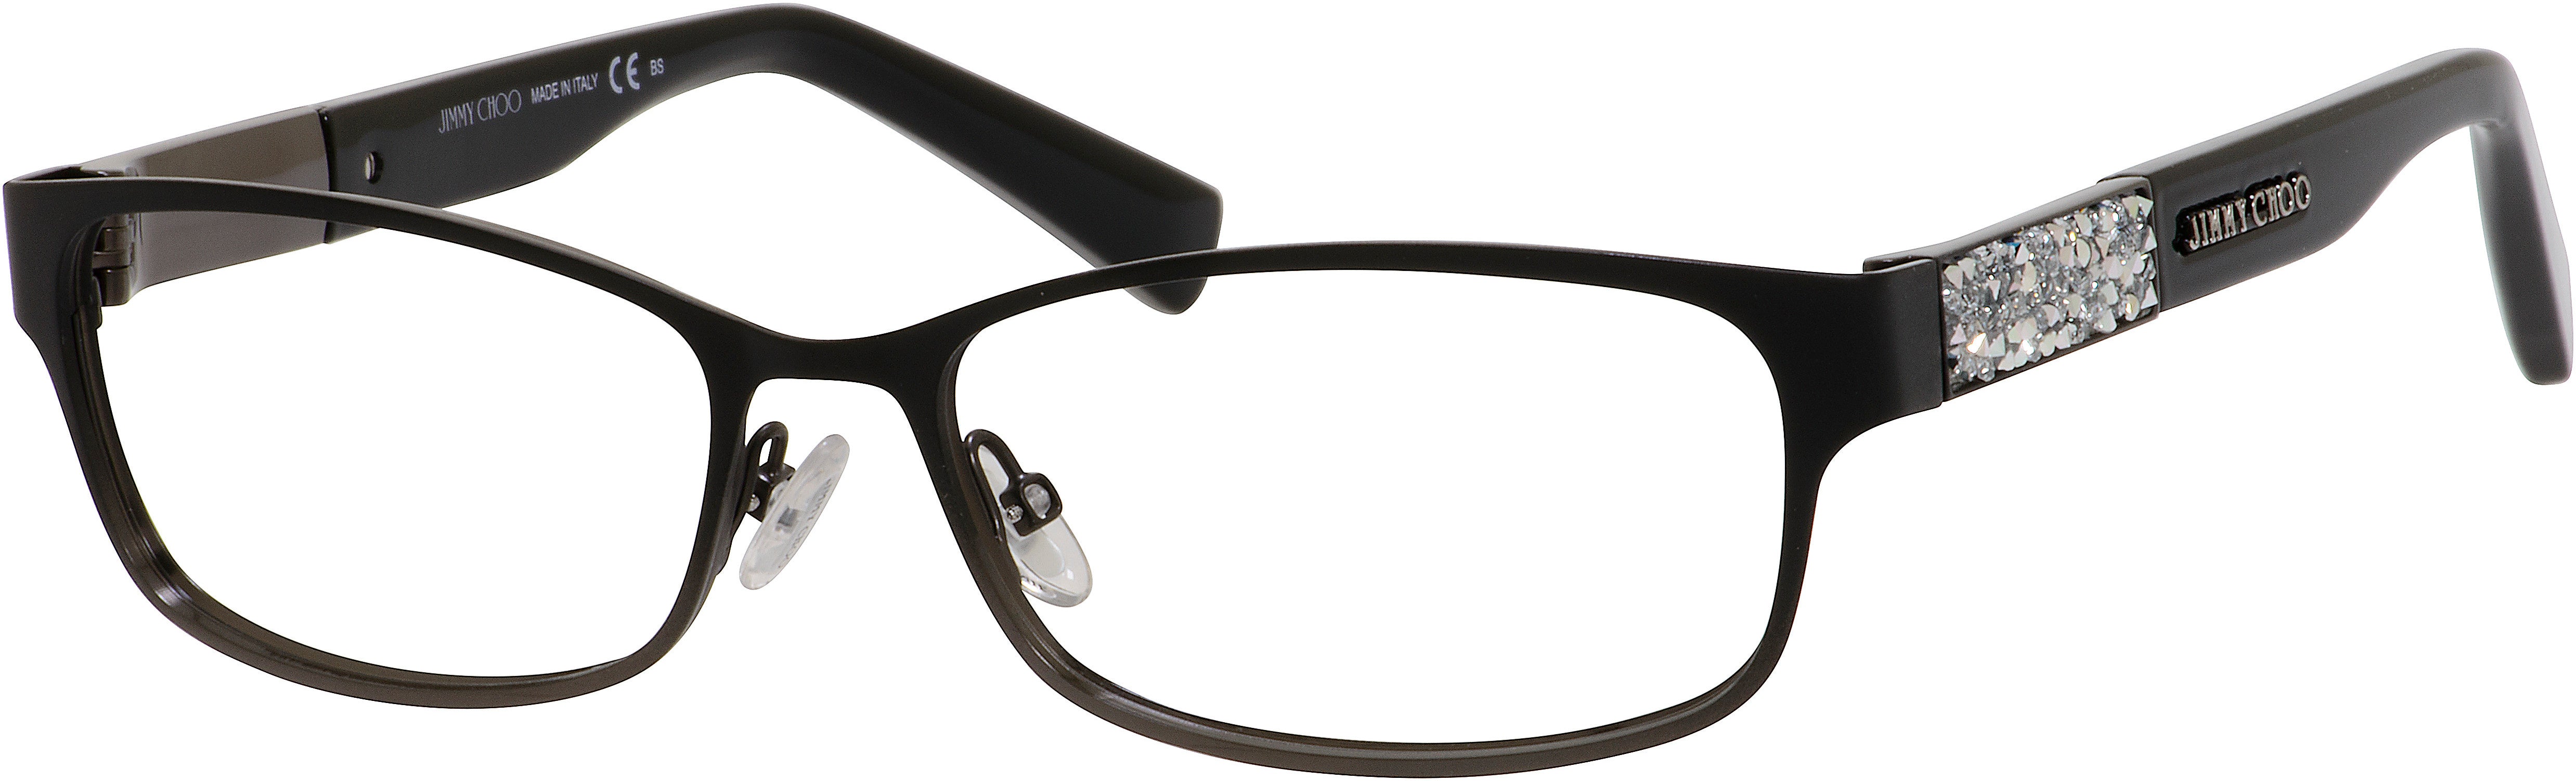  Jimmy Choo 124 Rectangular Eyeglasses 0KI8-0KI8  Matte Black (00 Demo Lens)